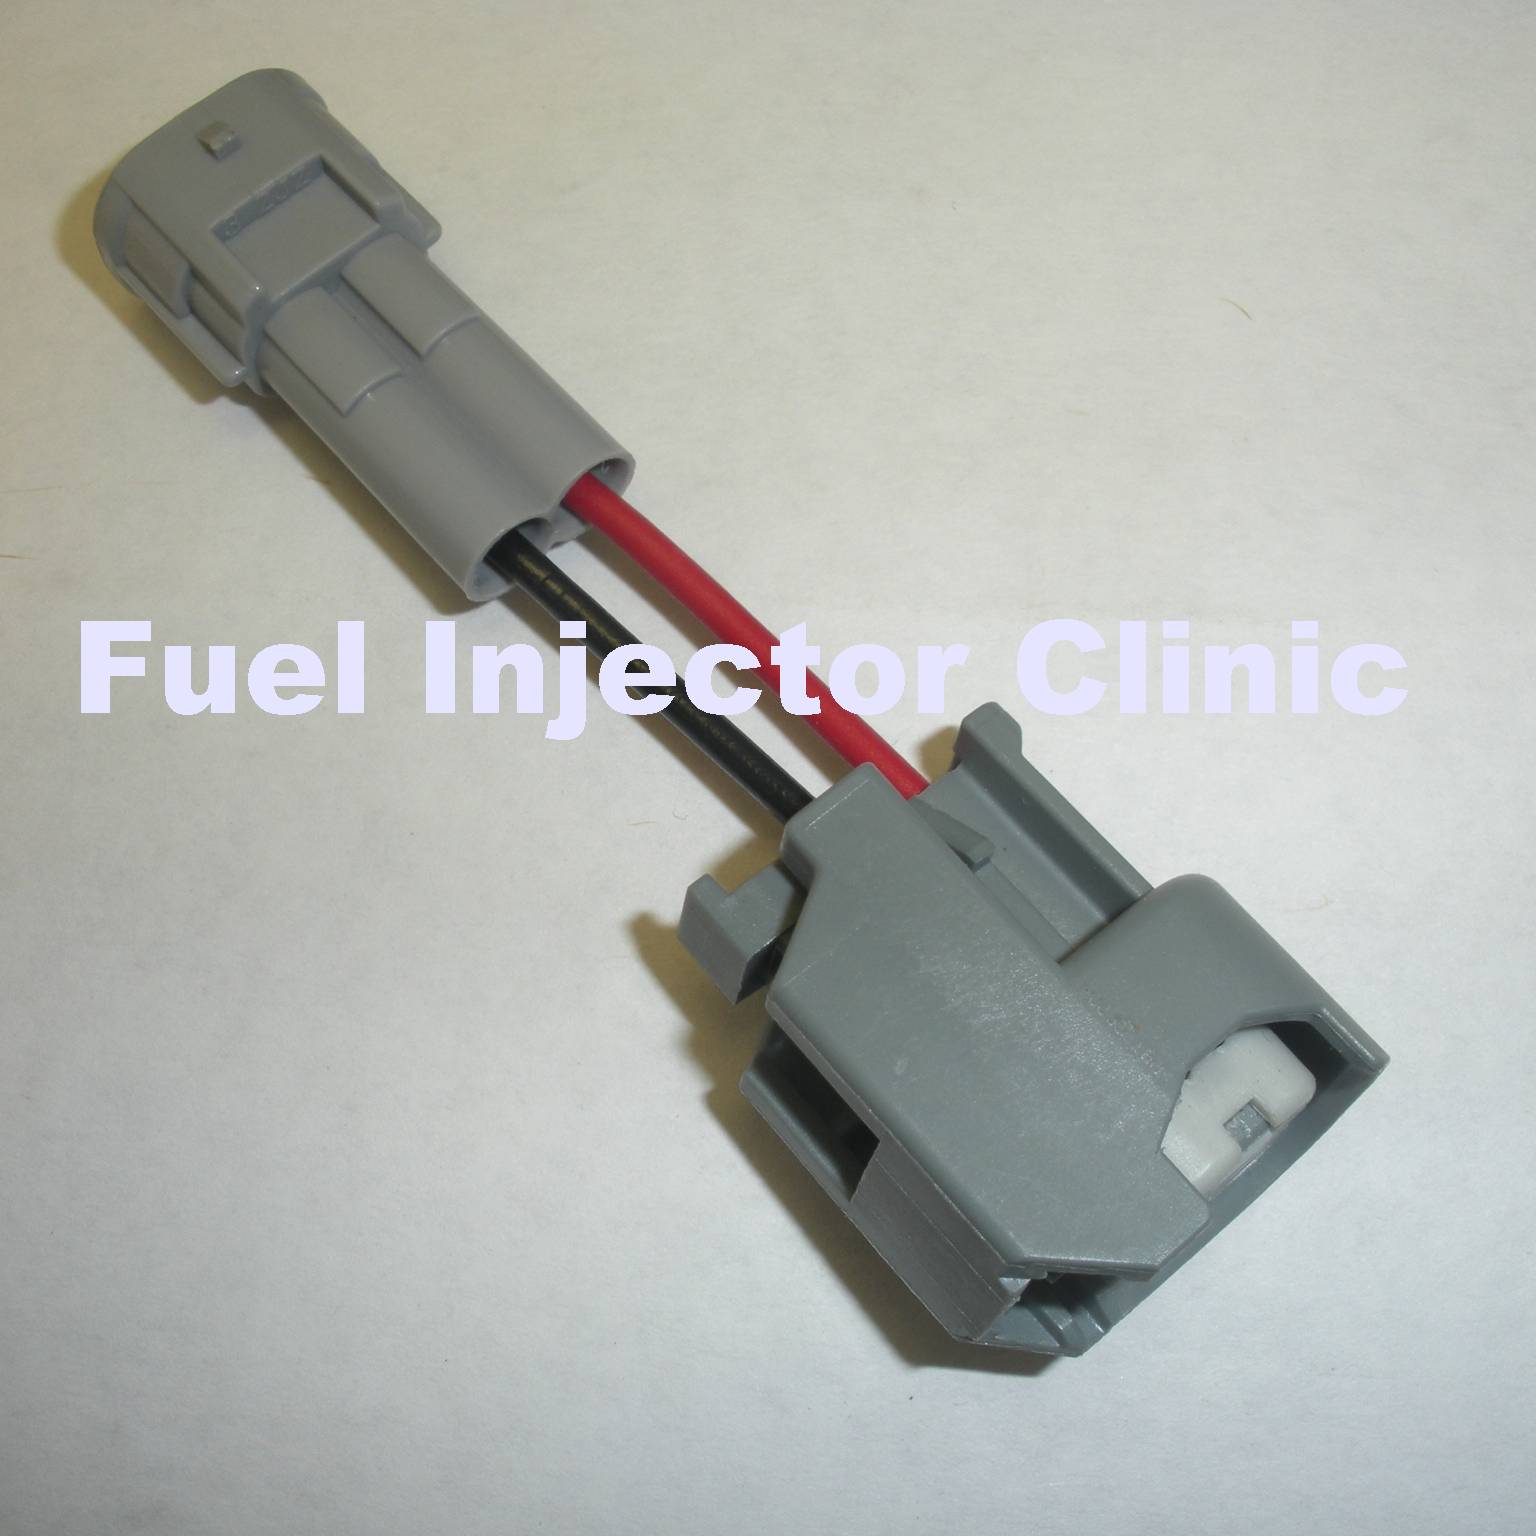 Fuel Injector Clinic Jetronic/EV1 to Honda plug adaptors - Click Image to Close